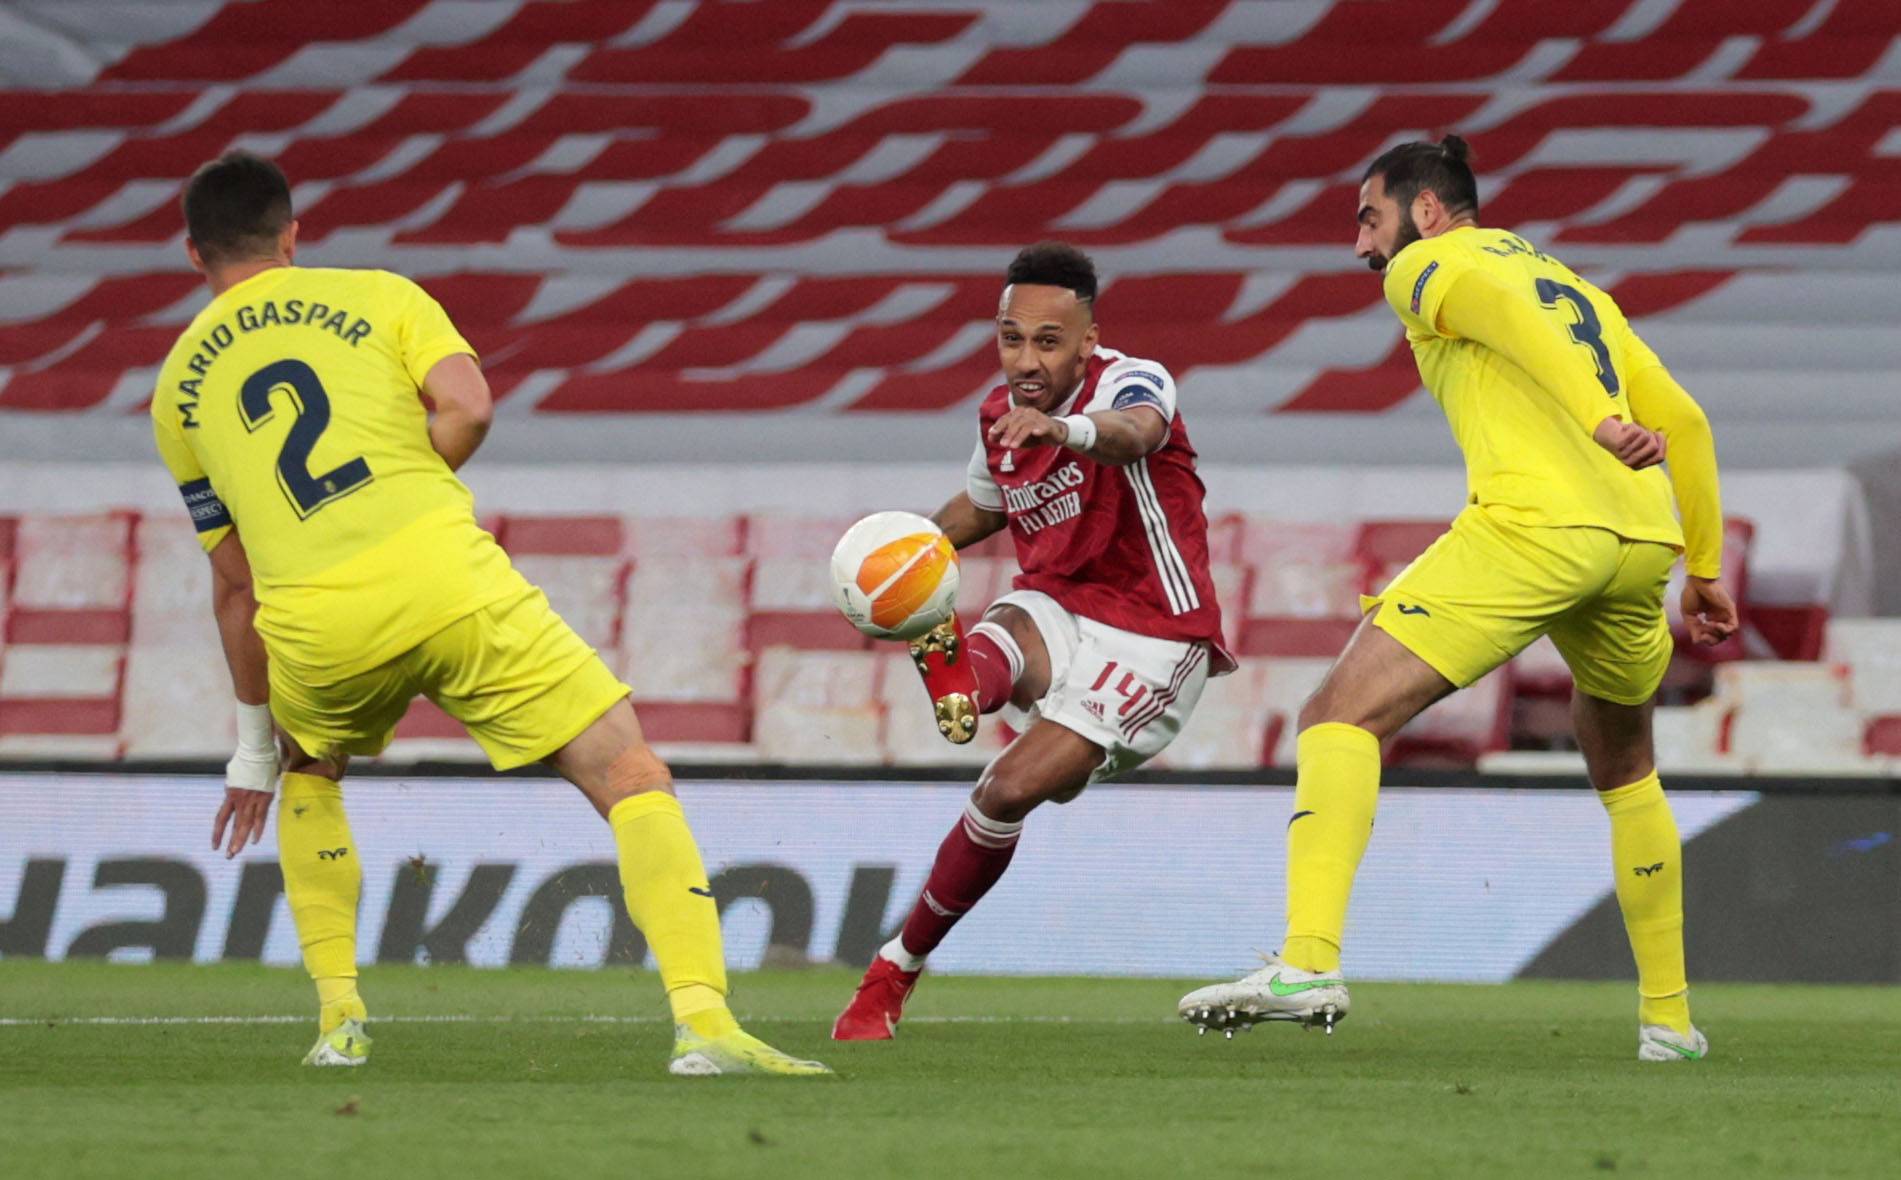 Europa League - Semi Final Second Leg - Arsenal v Villarreal